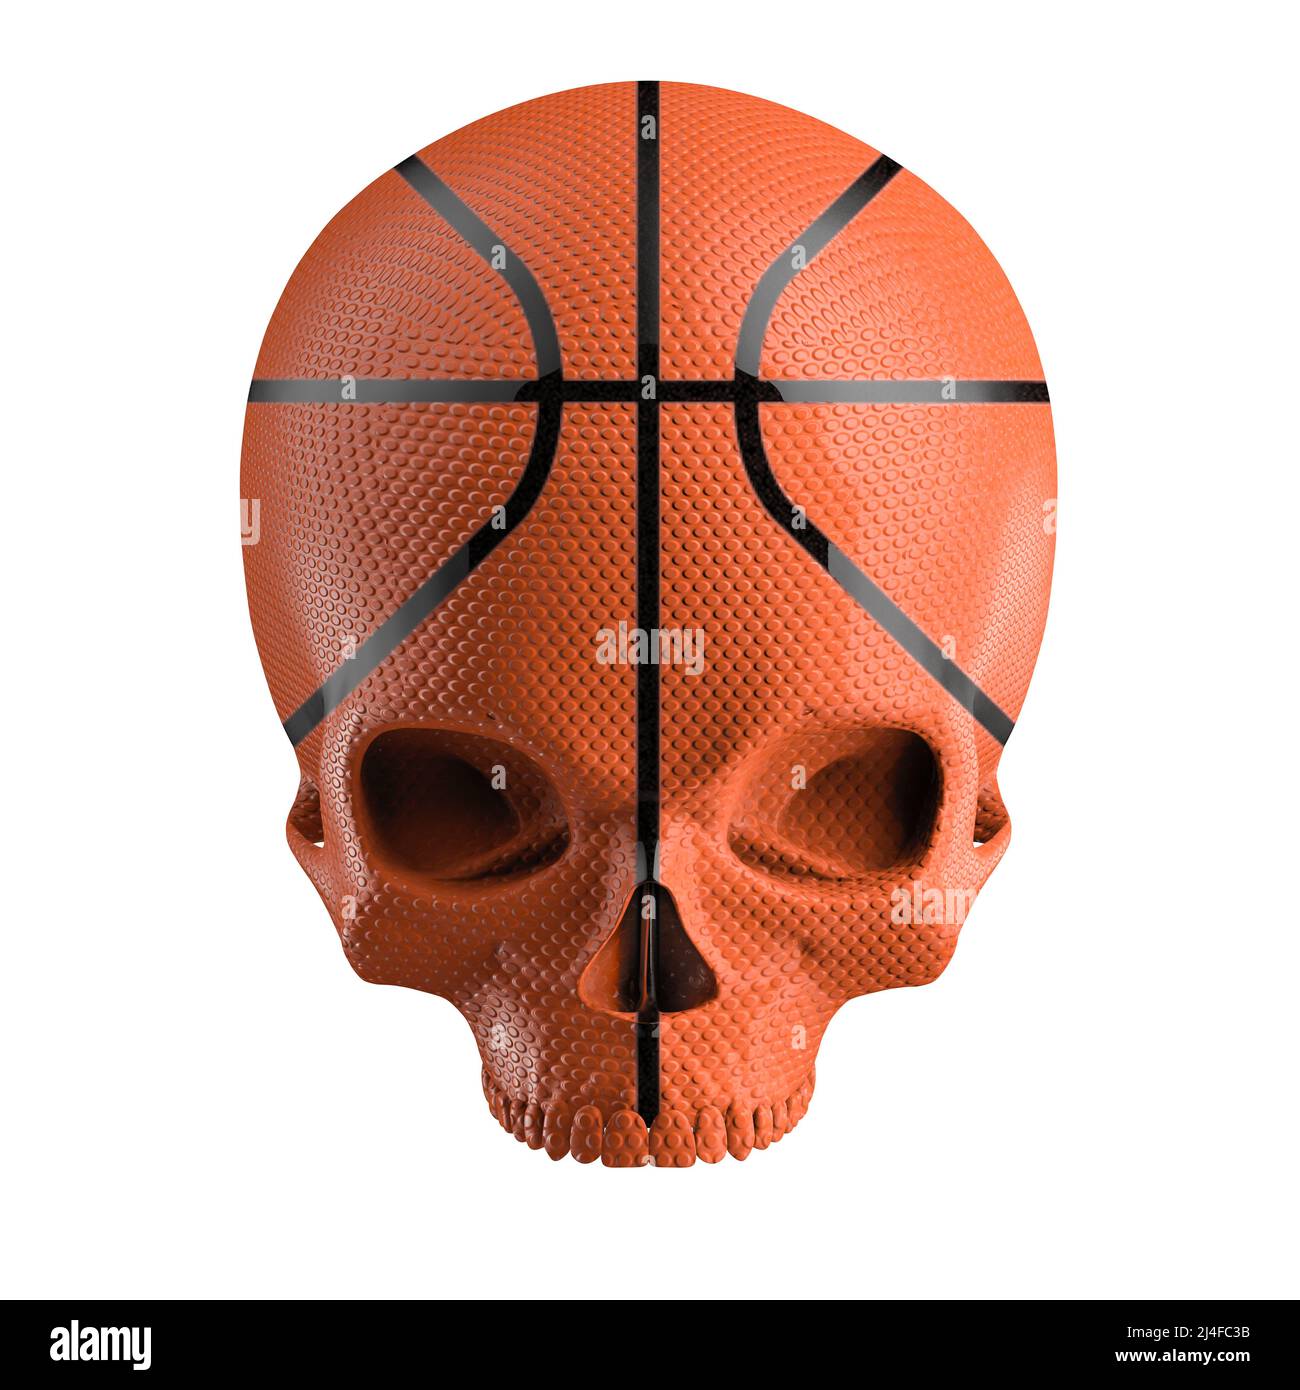 Basketball skull - 3D illustration of orange basketball shaped human skull isolated on white studio background Stock Photo